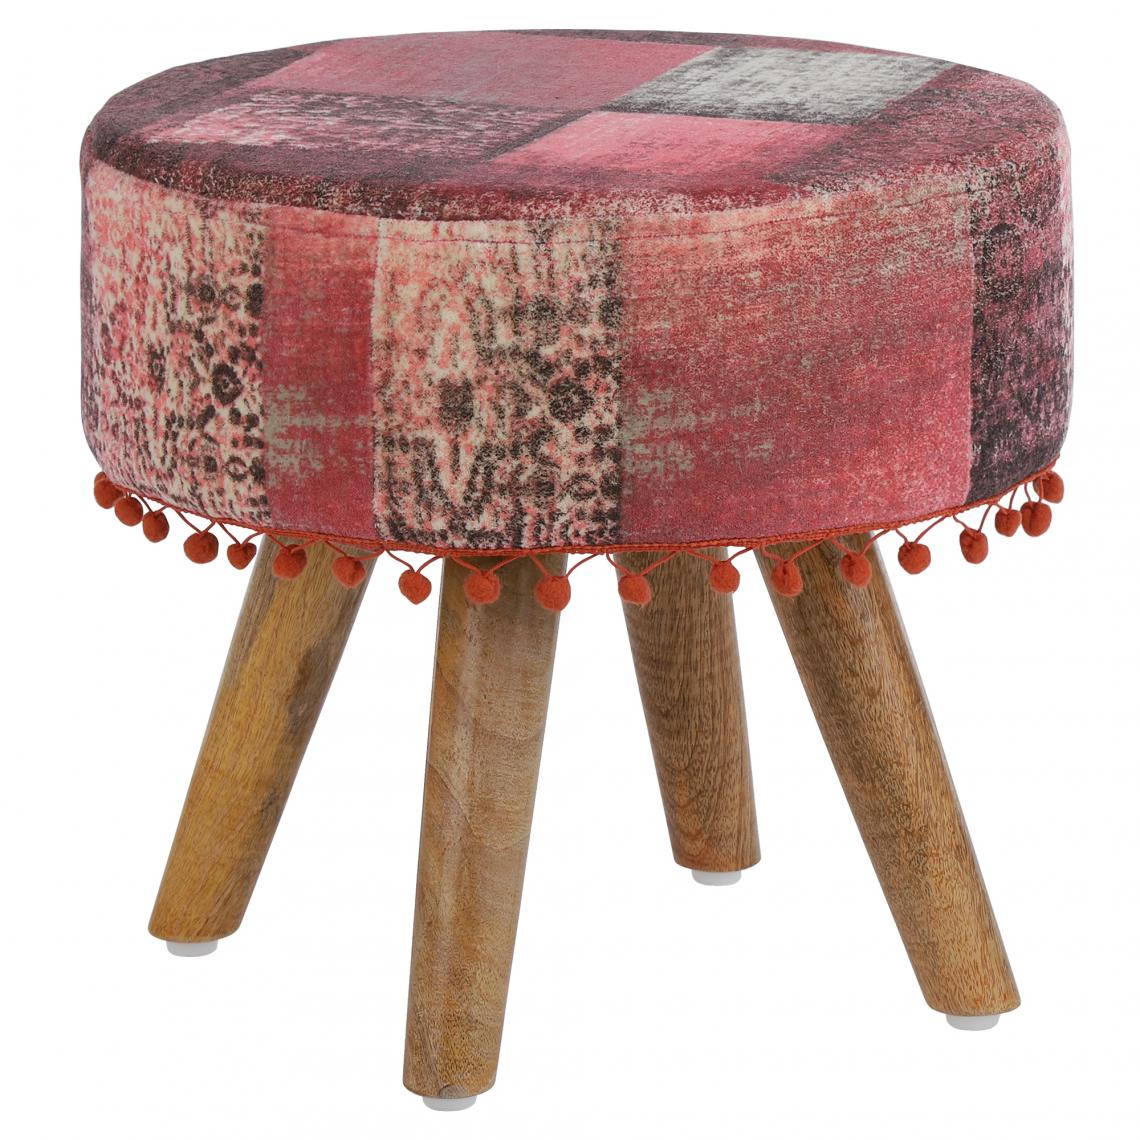 Womo-design - WOMO-DESIGN Tabouret rouge, 38x36 cm, en tissu et pieds en bois - Tabourets